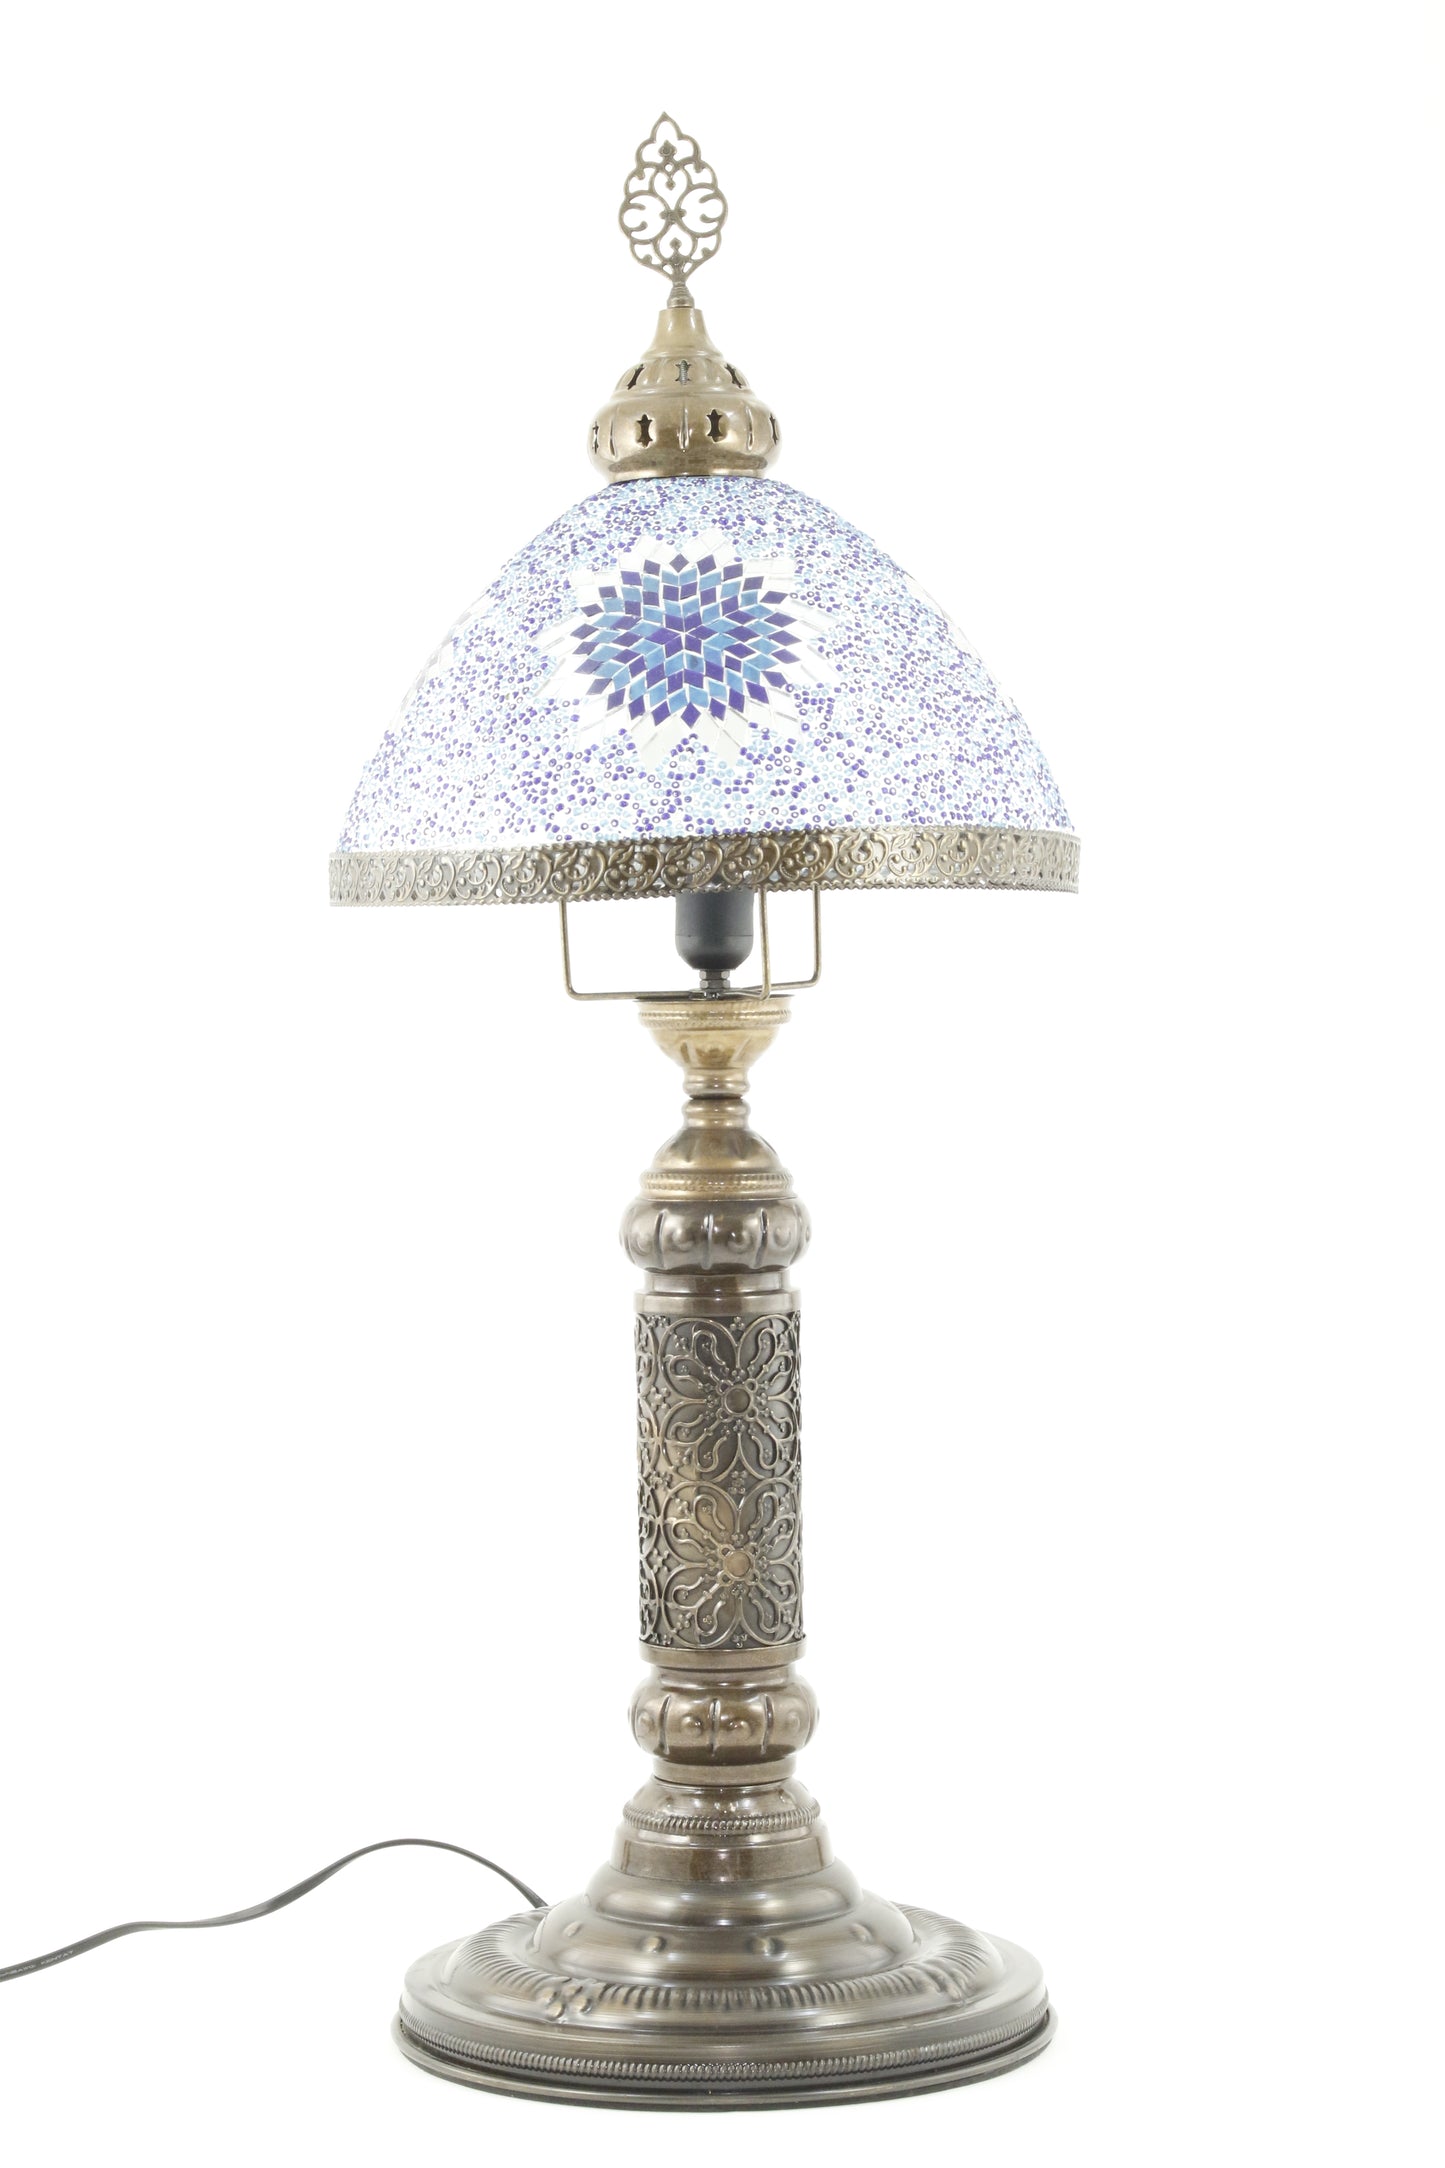 TURKISH MOSAIC GLASS TIFFANY LAMP BLUE -TURNED OFF